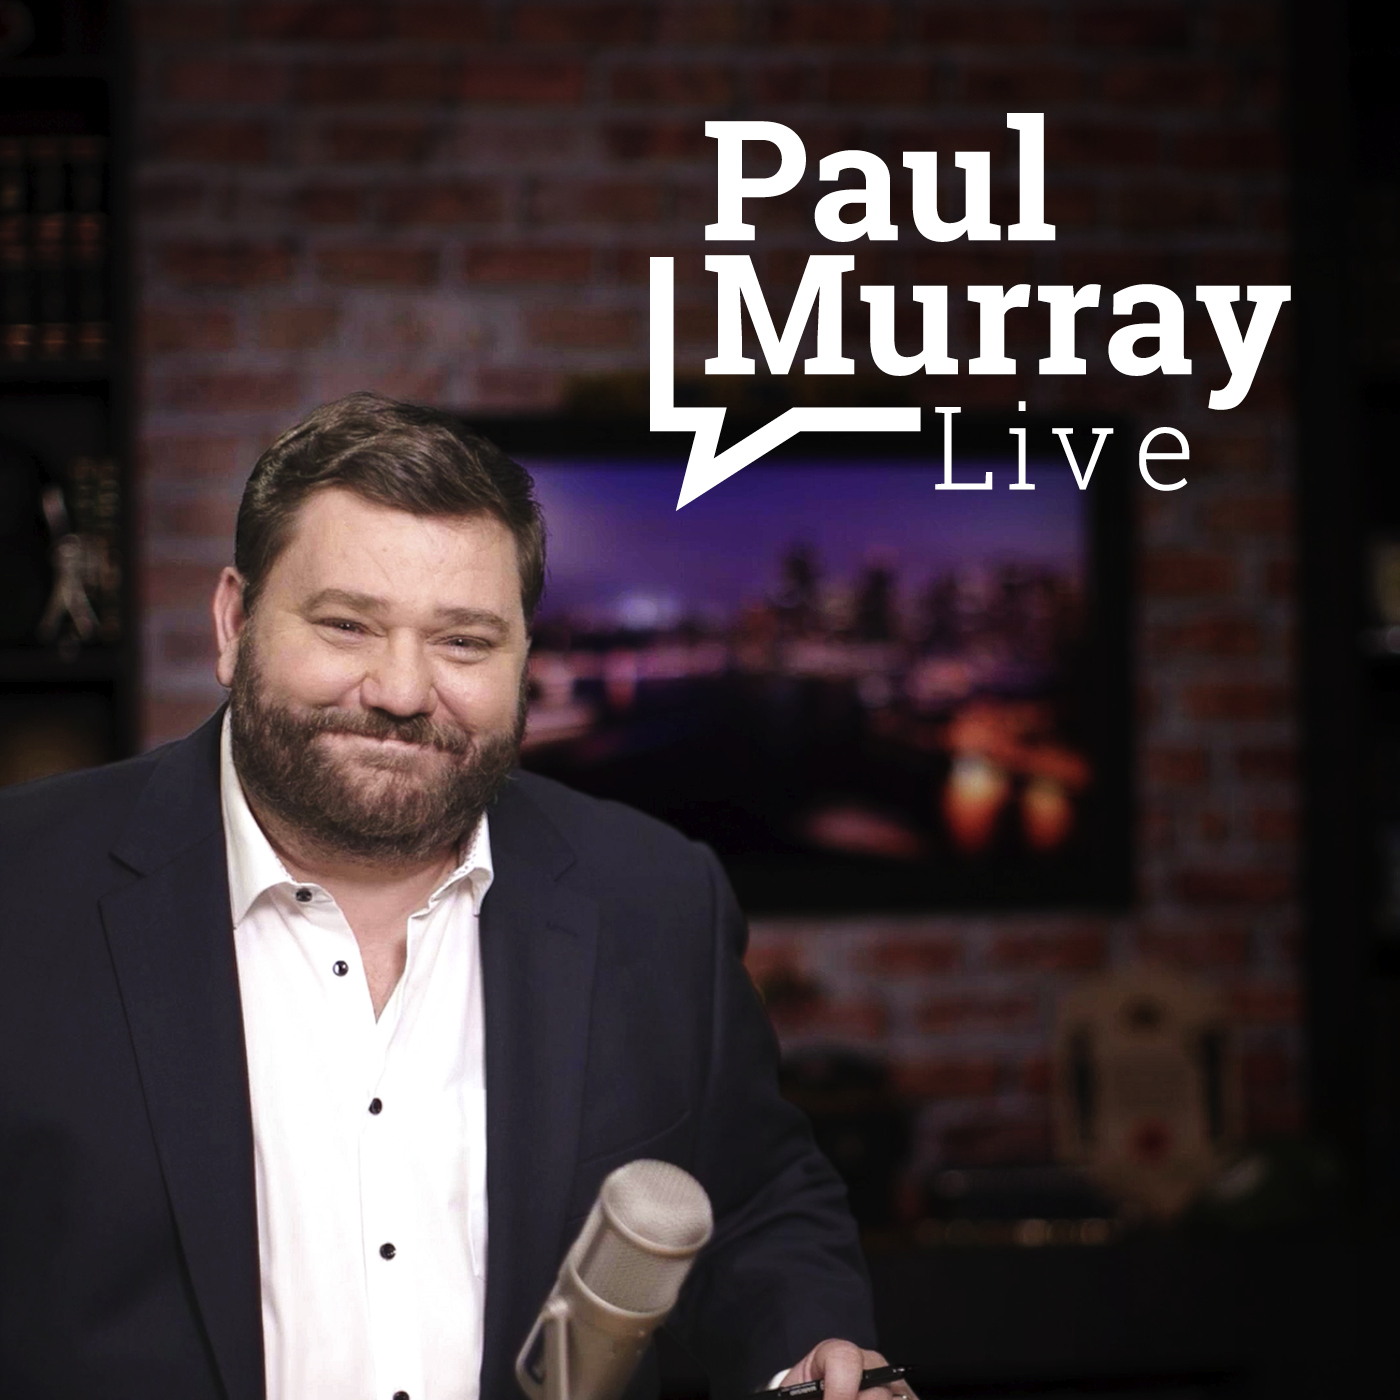 Paul Murray Live, Sunday 28th November